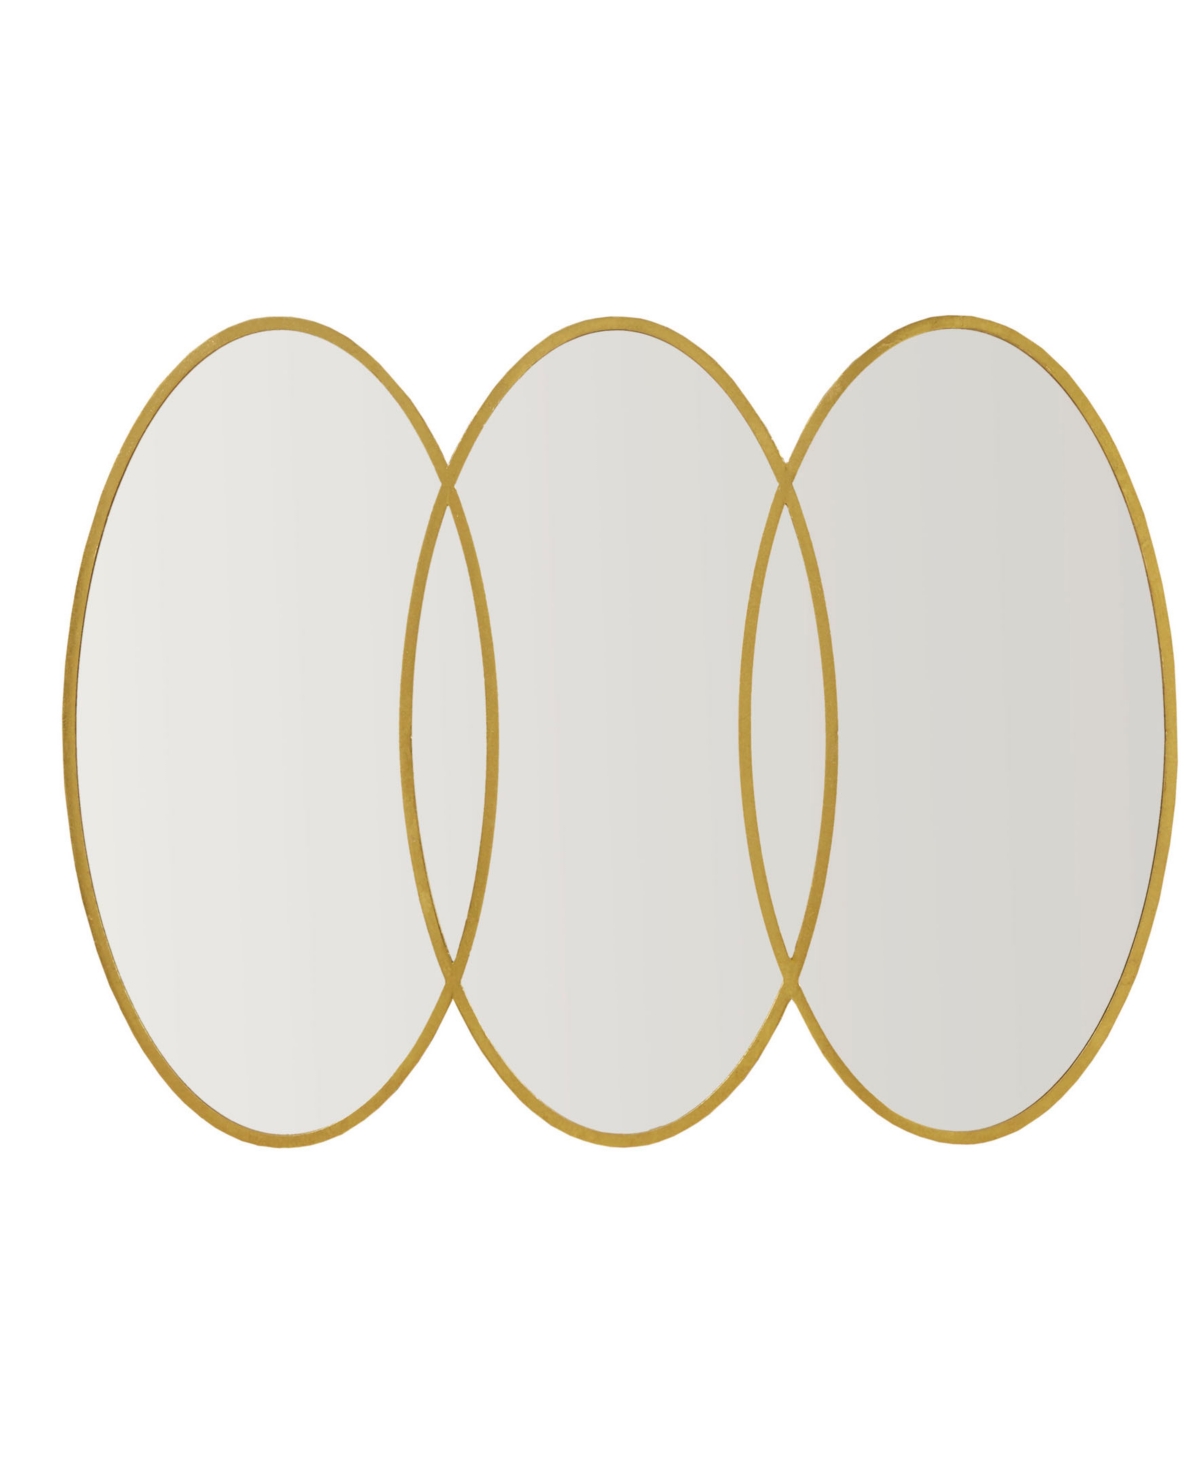 Madison Park Signature Eclipse Oval Wall Decor Mirror, 40" X 30" X 1.77" In Gold-tone